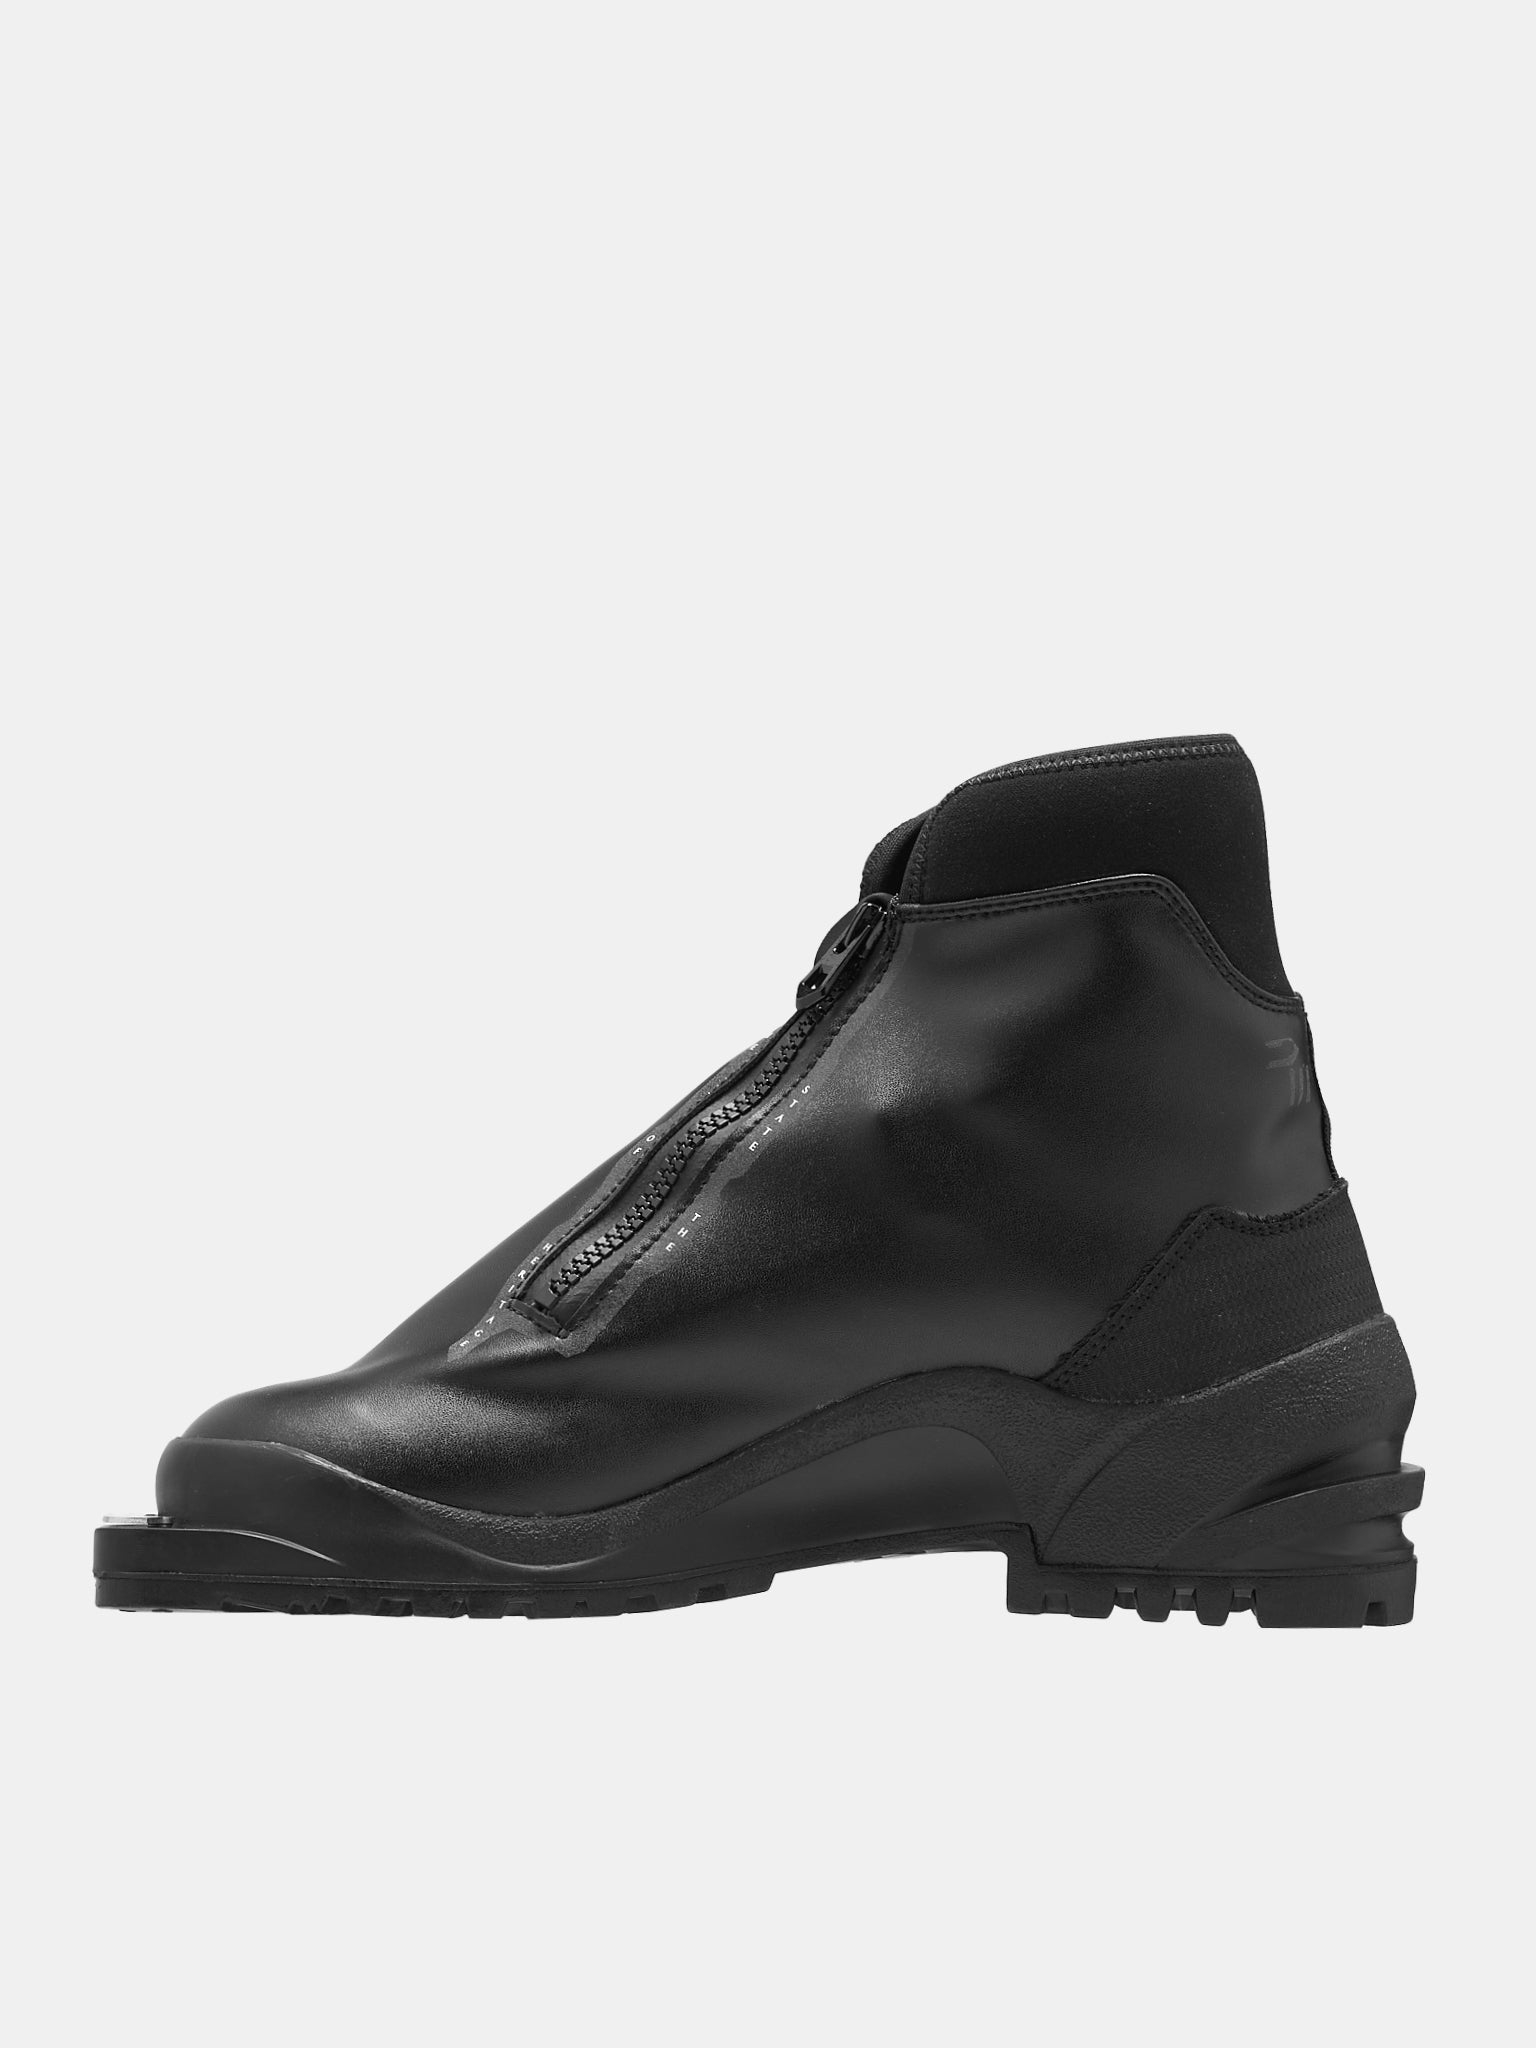 Graelon Boots (GRAELON-BLACK)